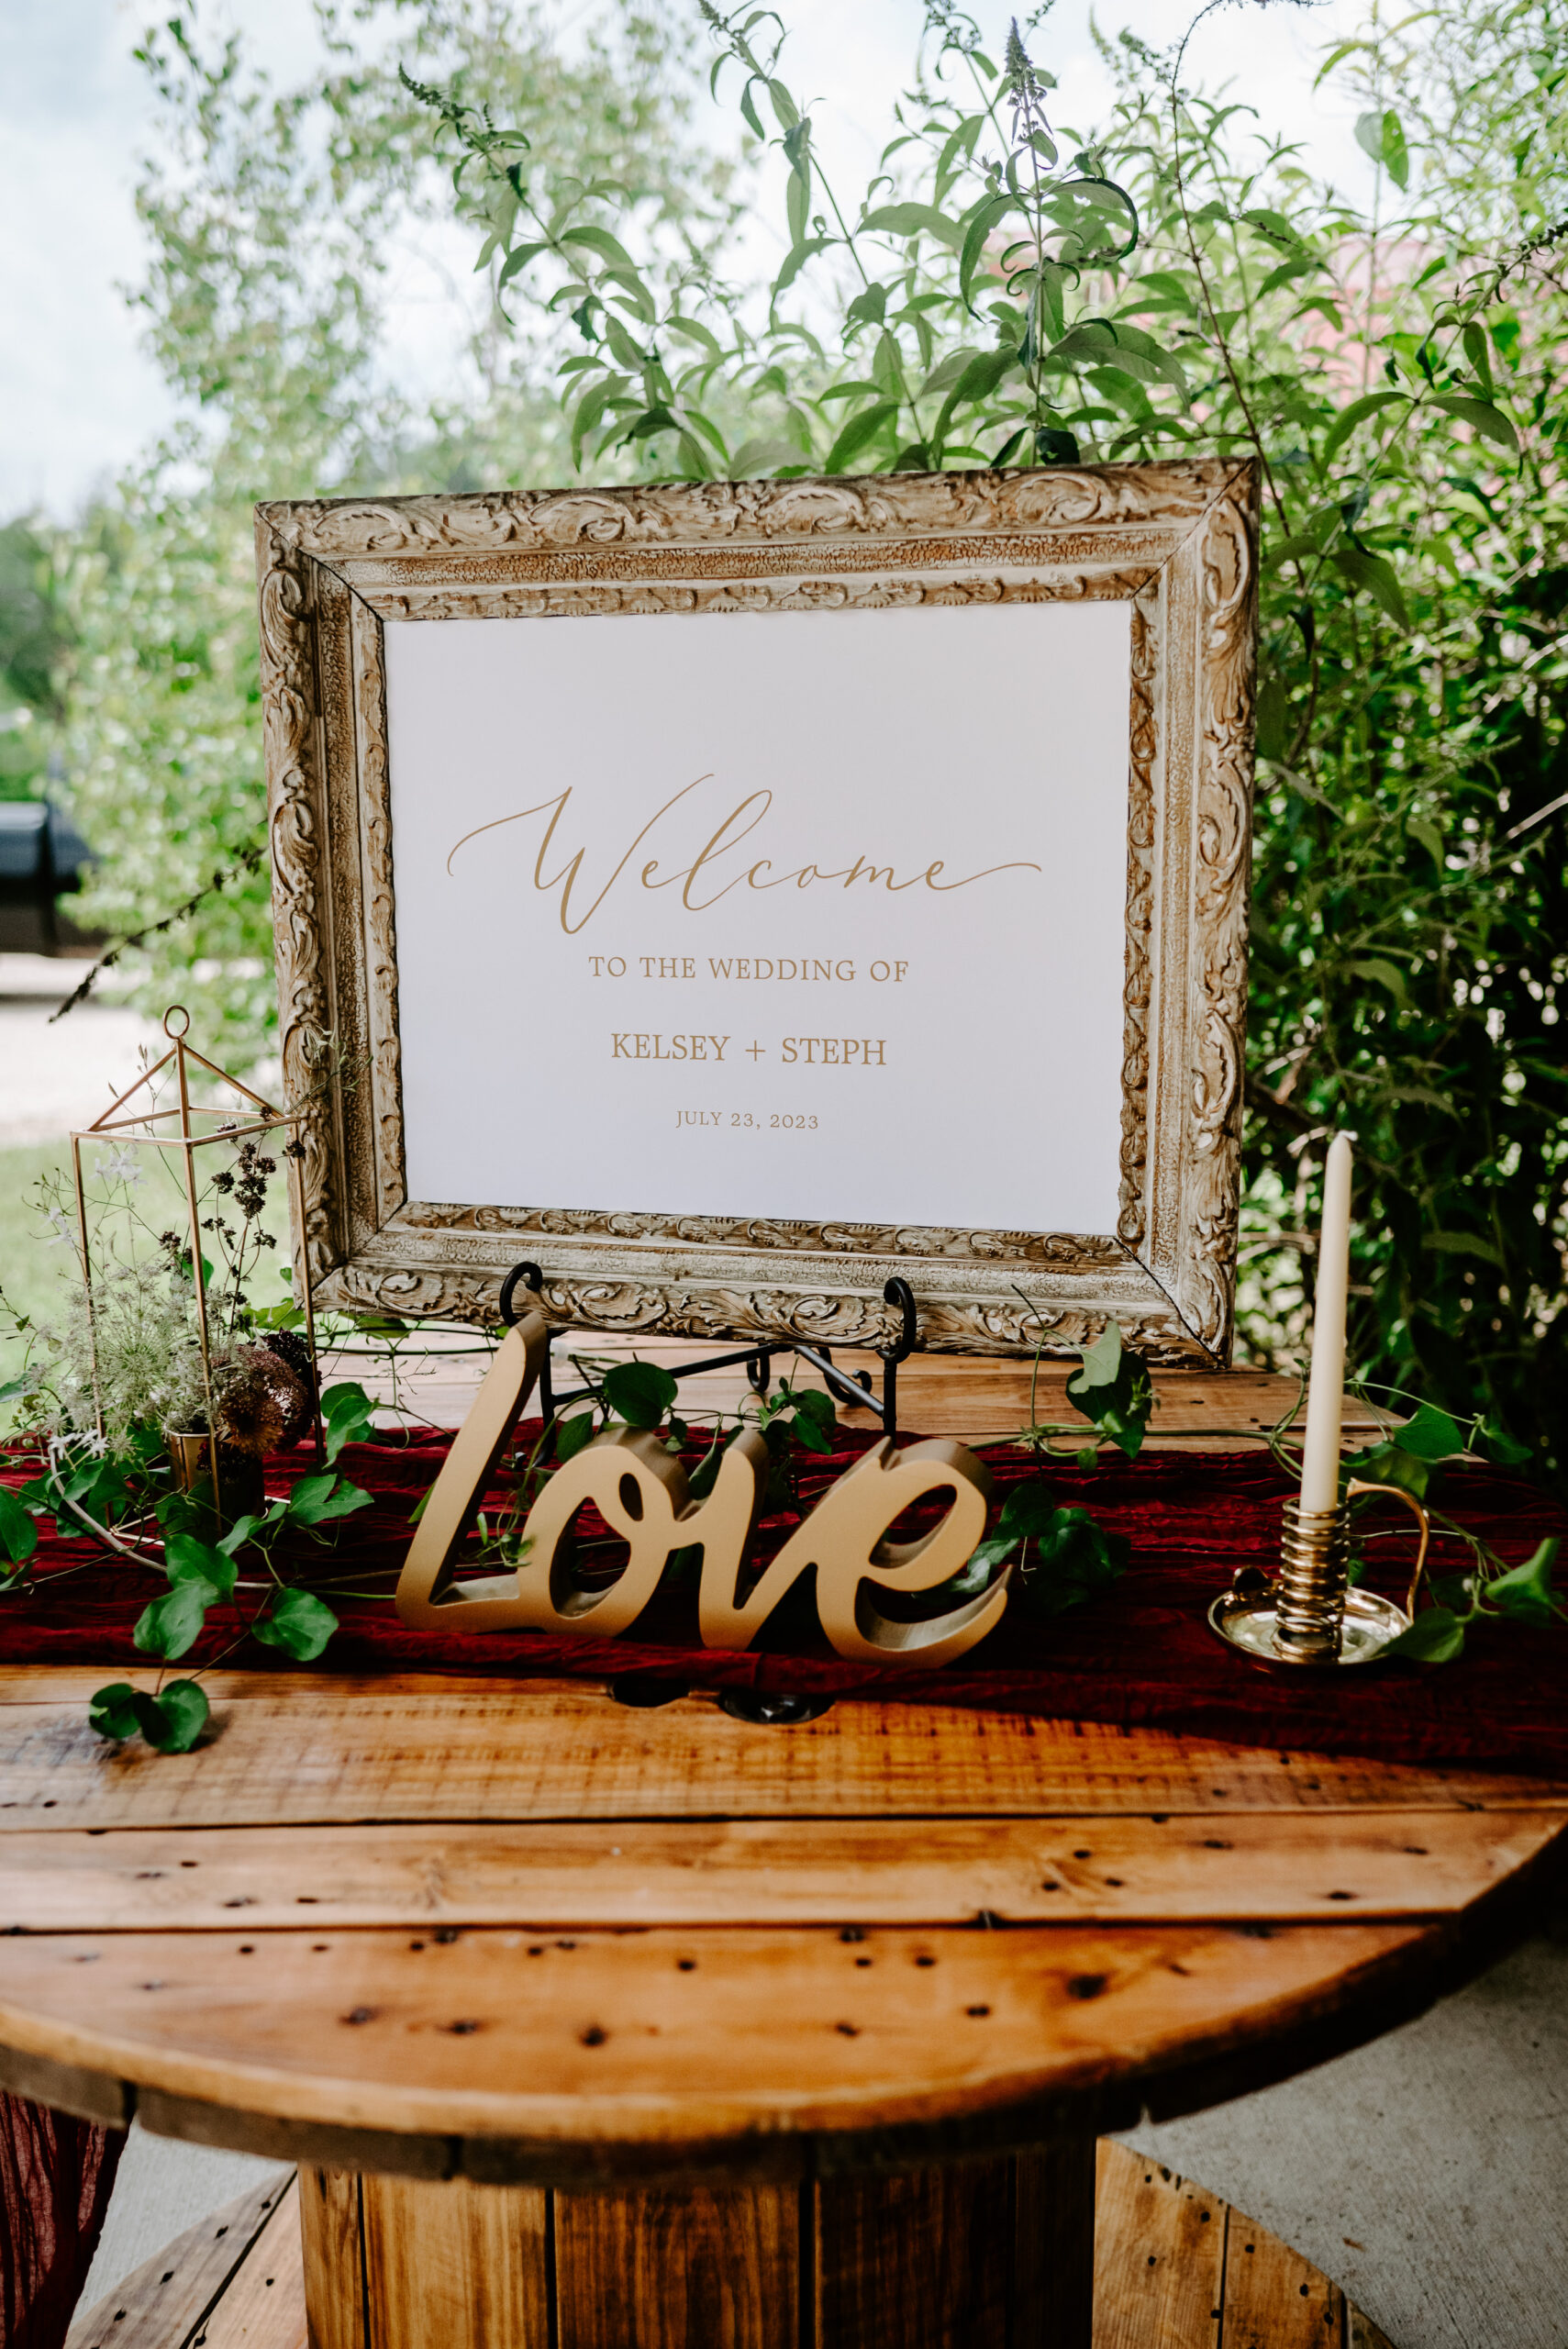 LGBTQ backyard wedding decor, wooden barrel decor, love sign, wedding florals, lgbtq wedding photographer in michigan Liv Lyszyk Photography